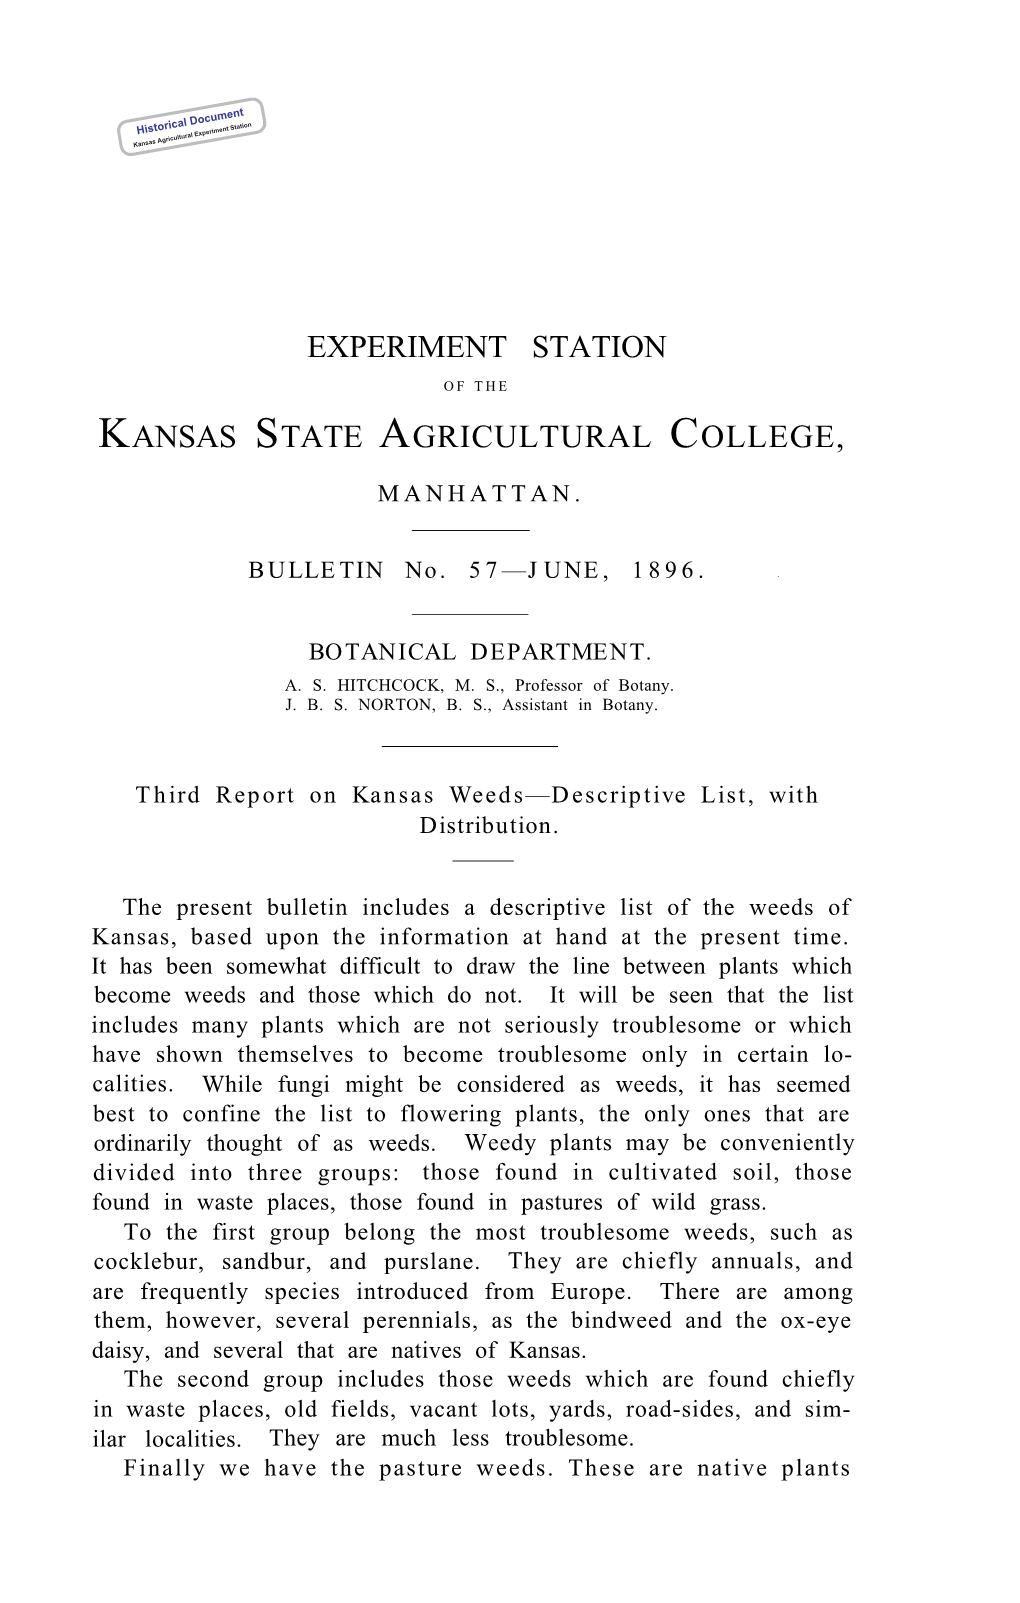 SB057 1896 Third Report on Kansas Weeds—Descriptive List, With